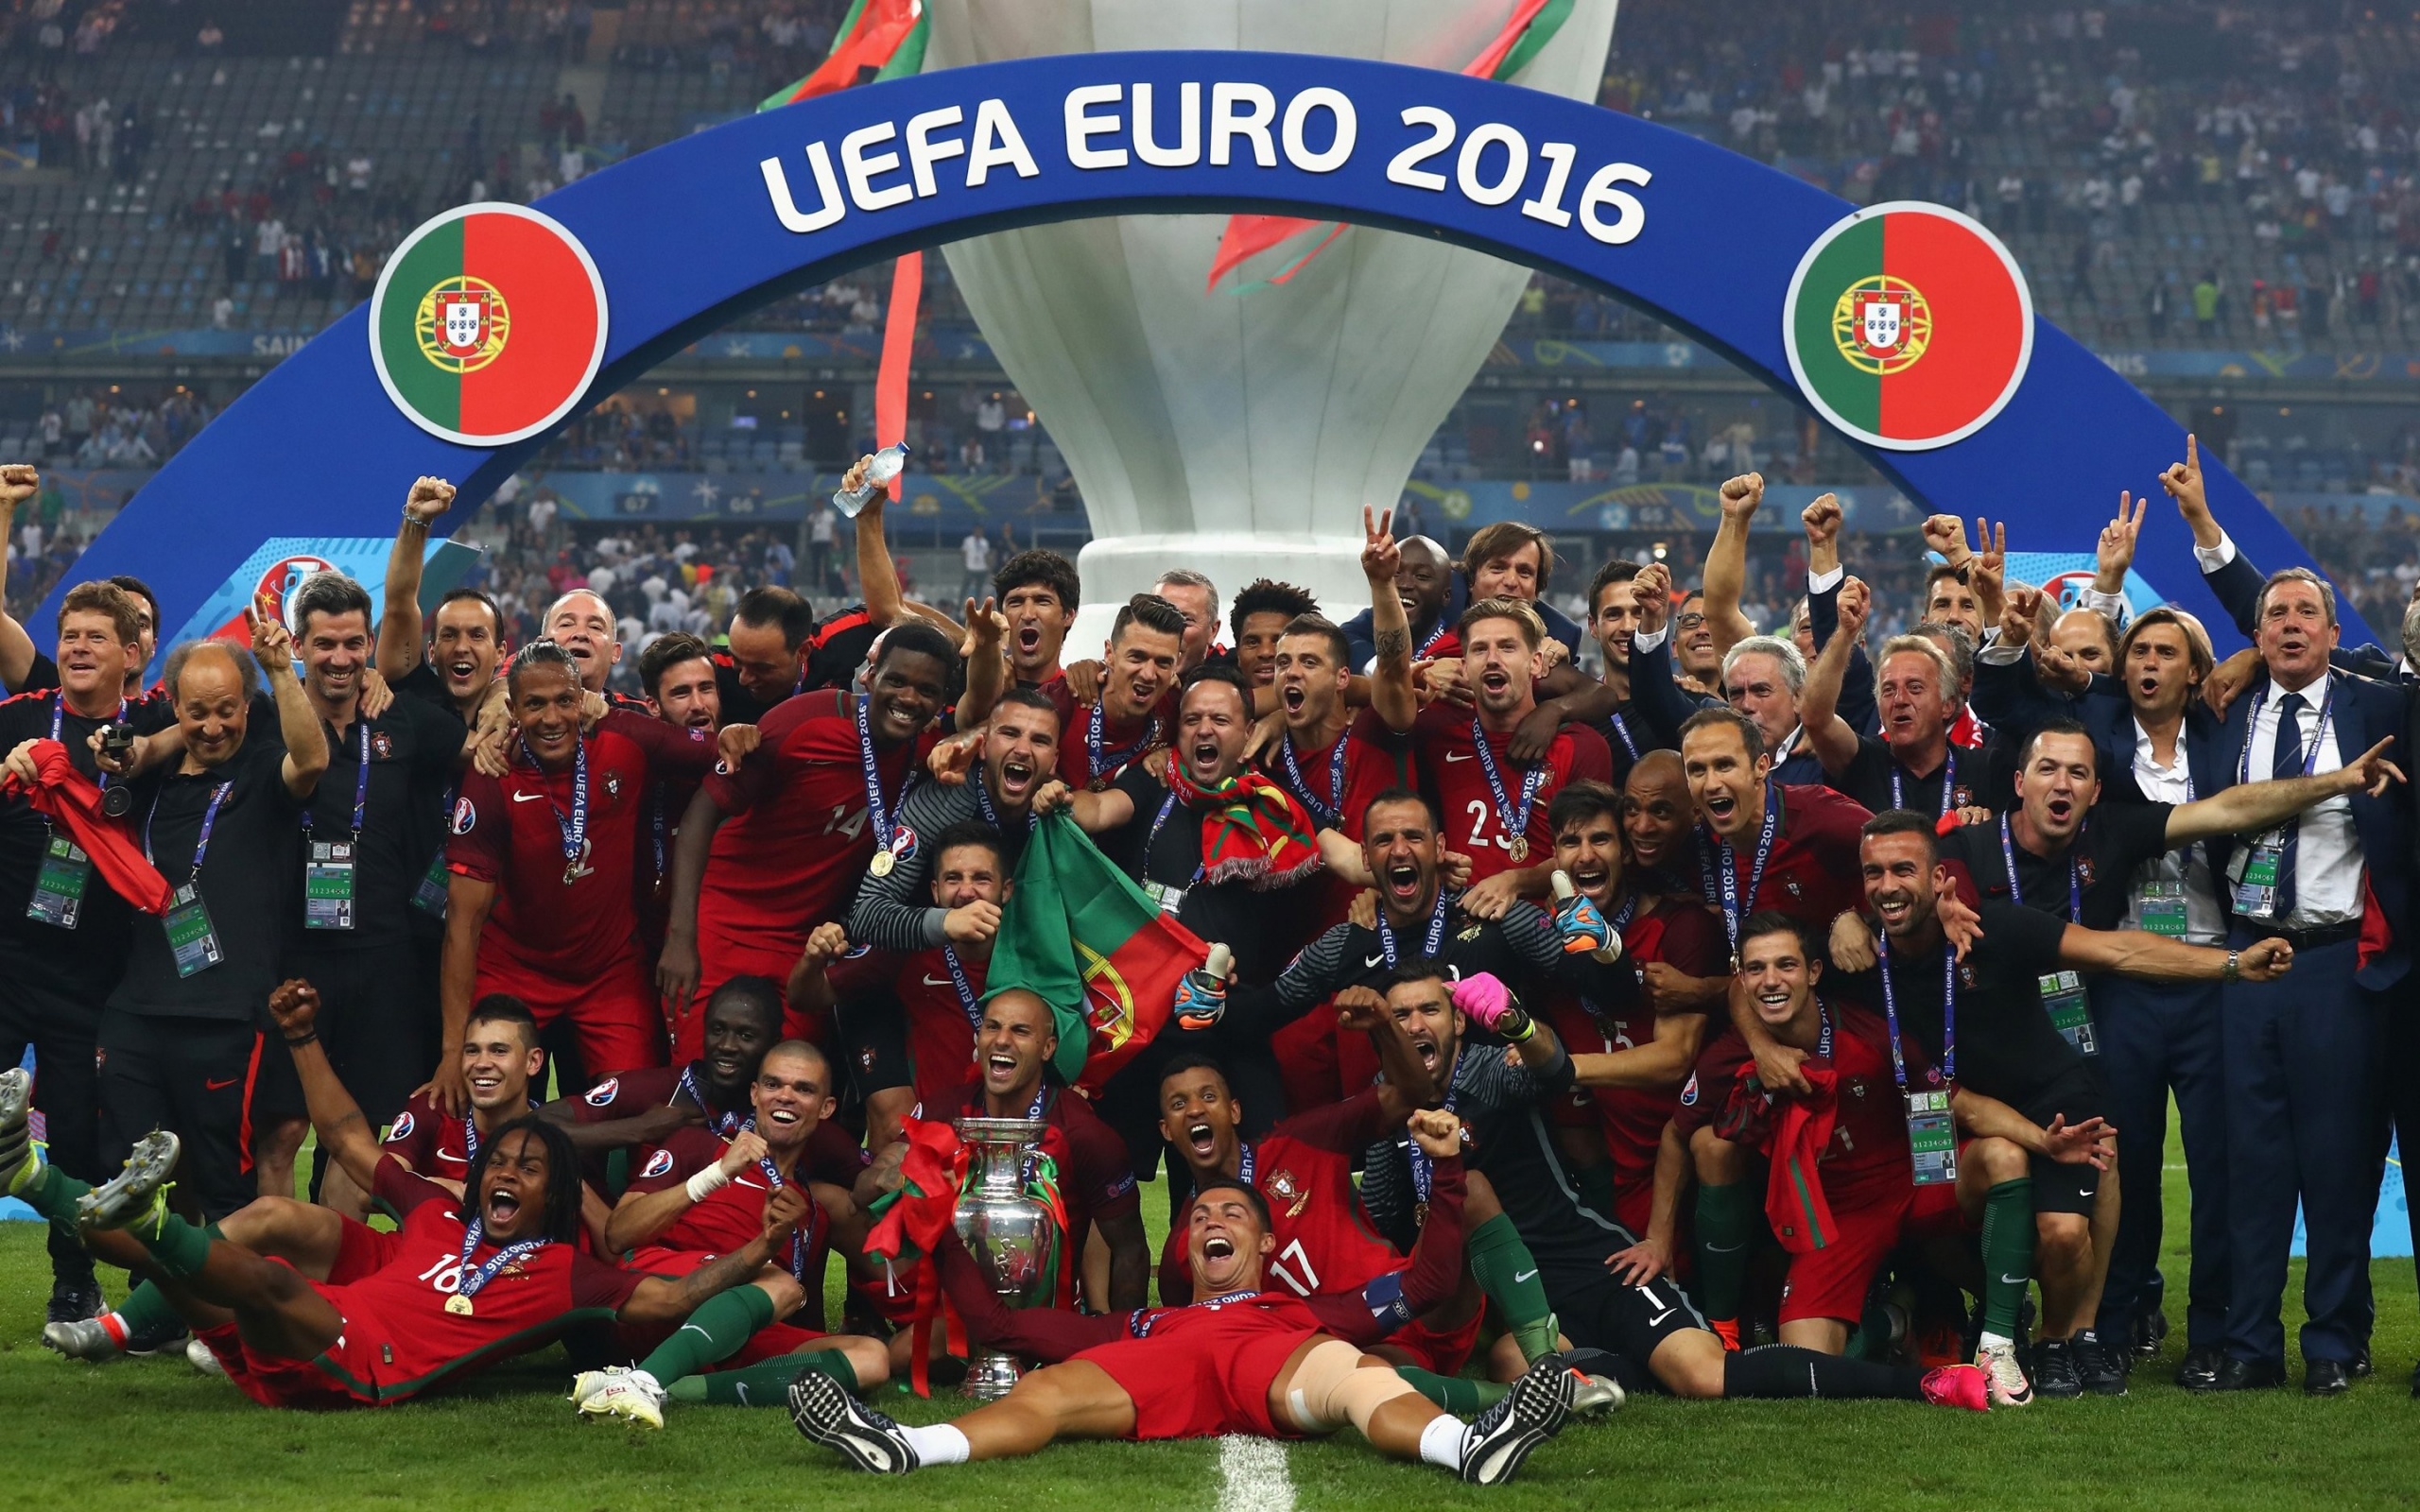 Уефа 2. Сборная Португалии евро 2016. Португалия чемпион Европы 2016. Португалия победитель евро 2016. Португалия футбол евро 2016.